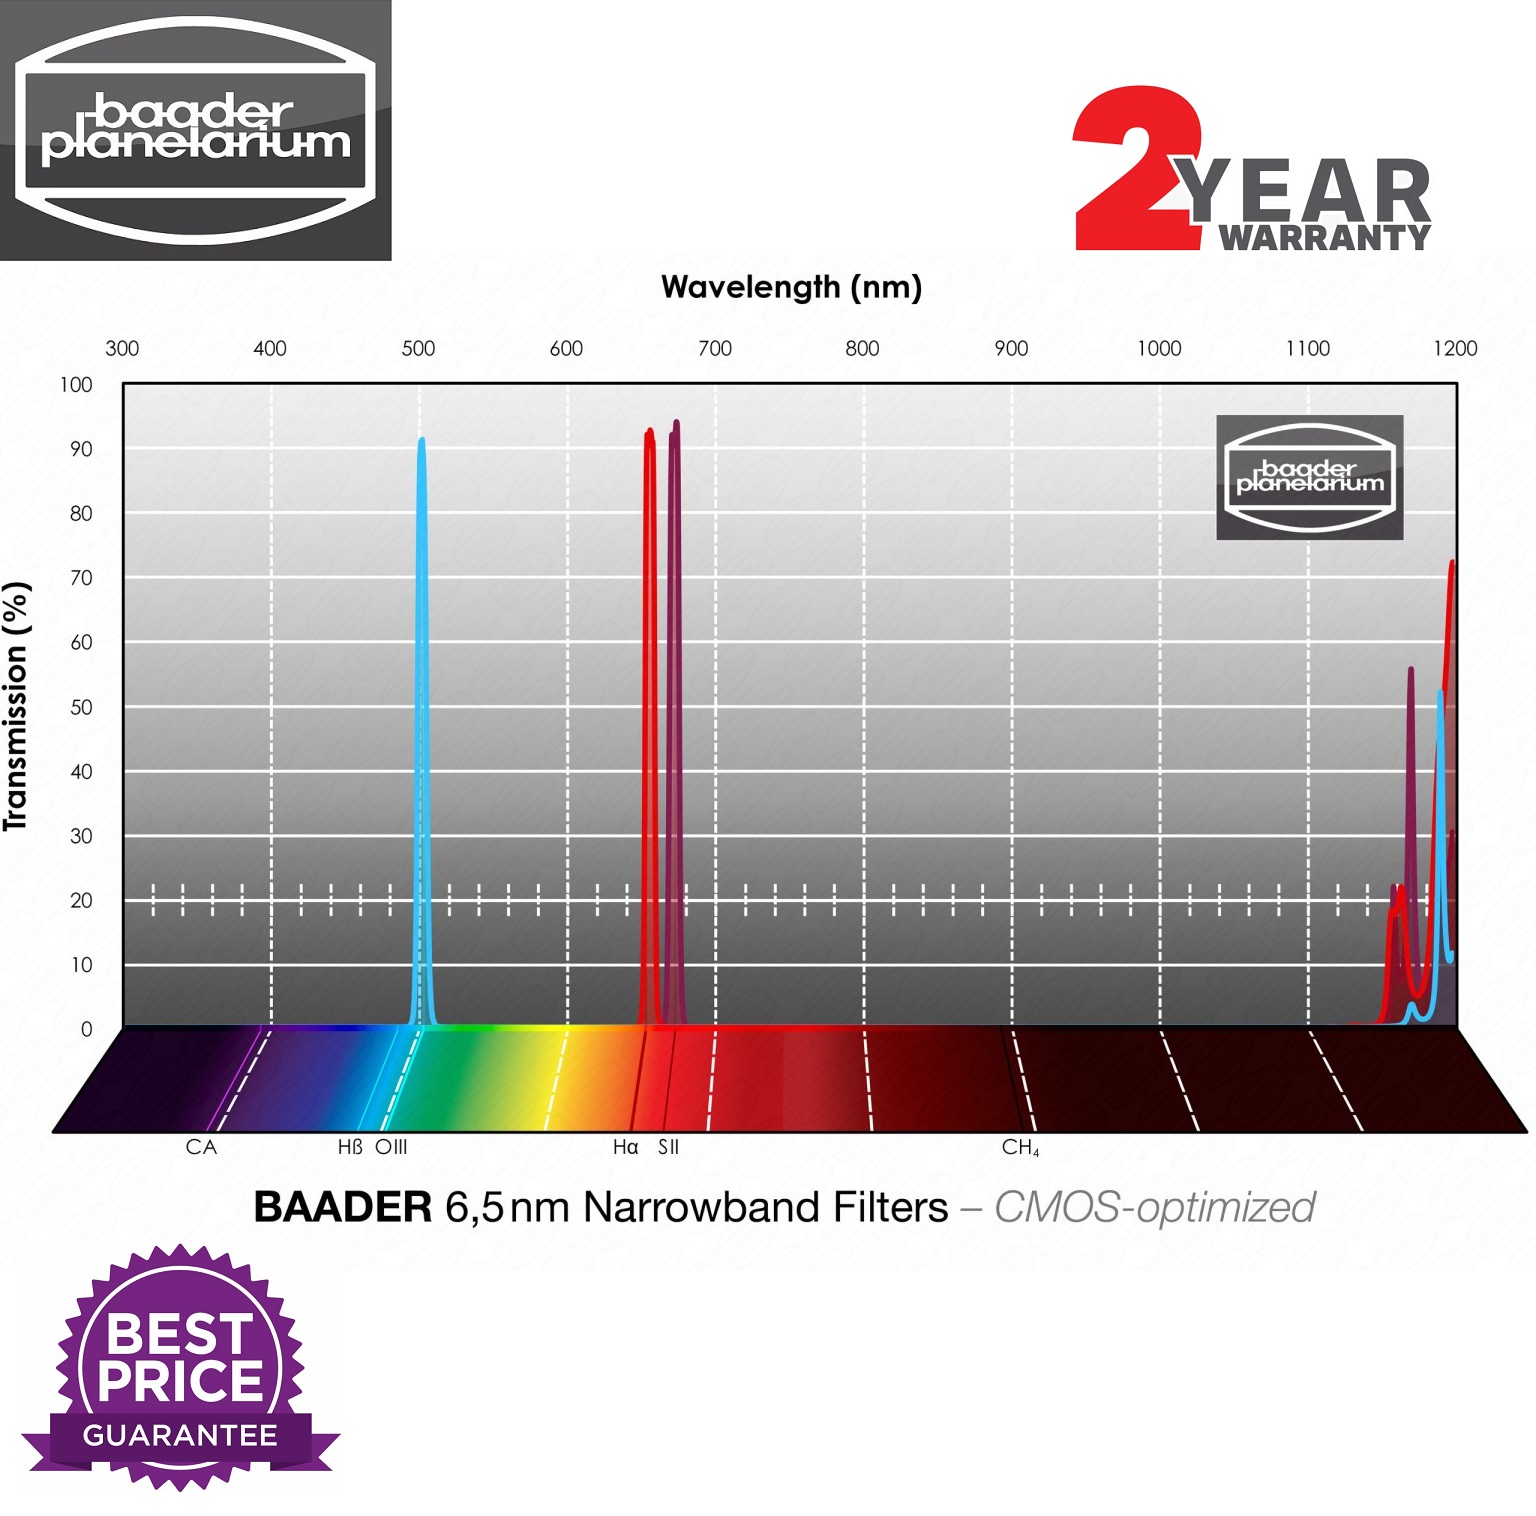 Baader 6.5nm Narrowband-Filter-Set 2" CMOS Filter (H-alpha / O-III)